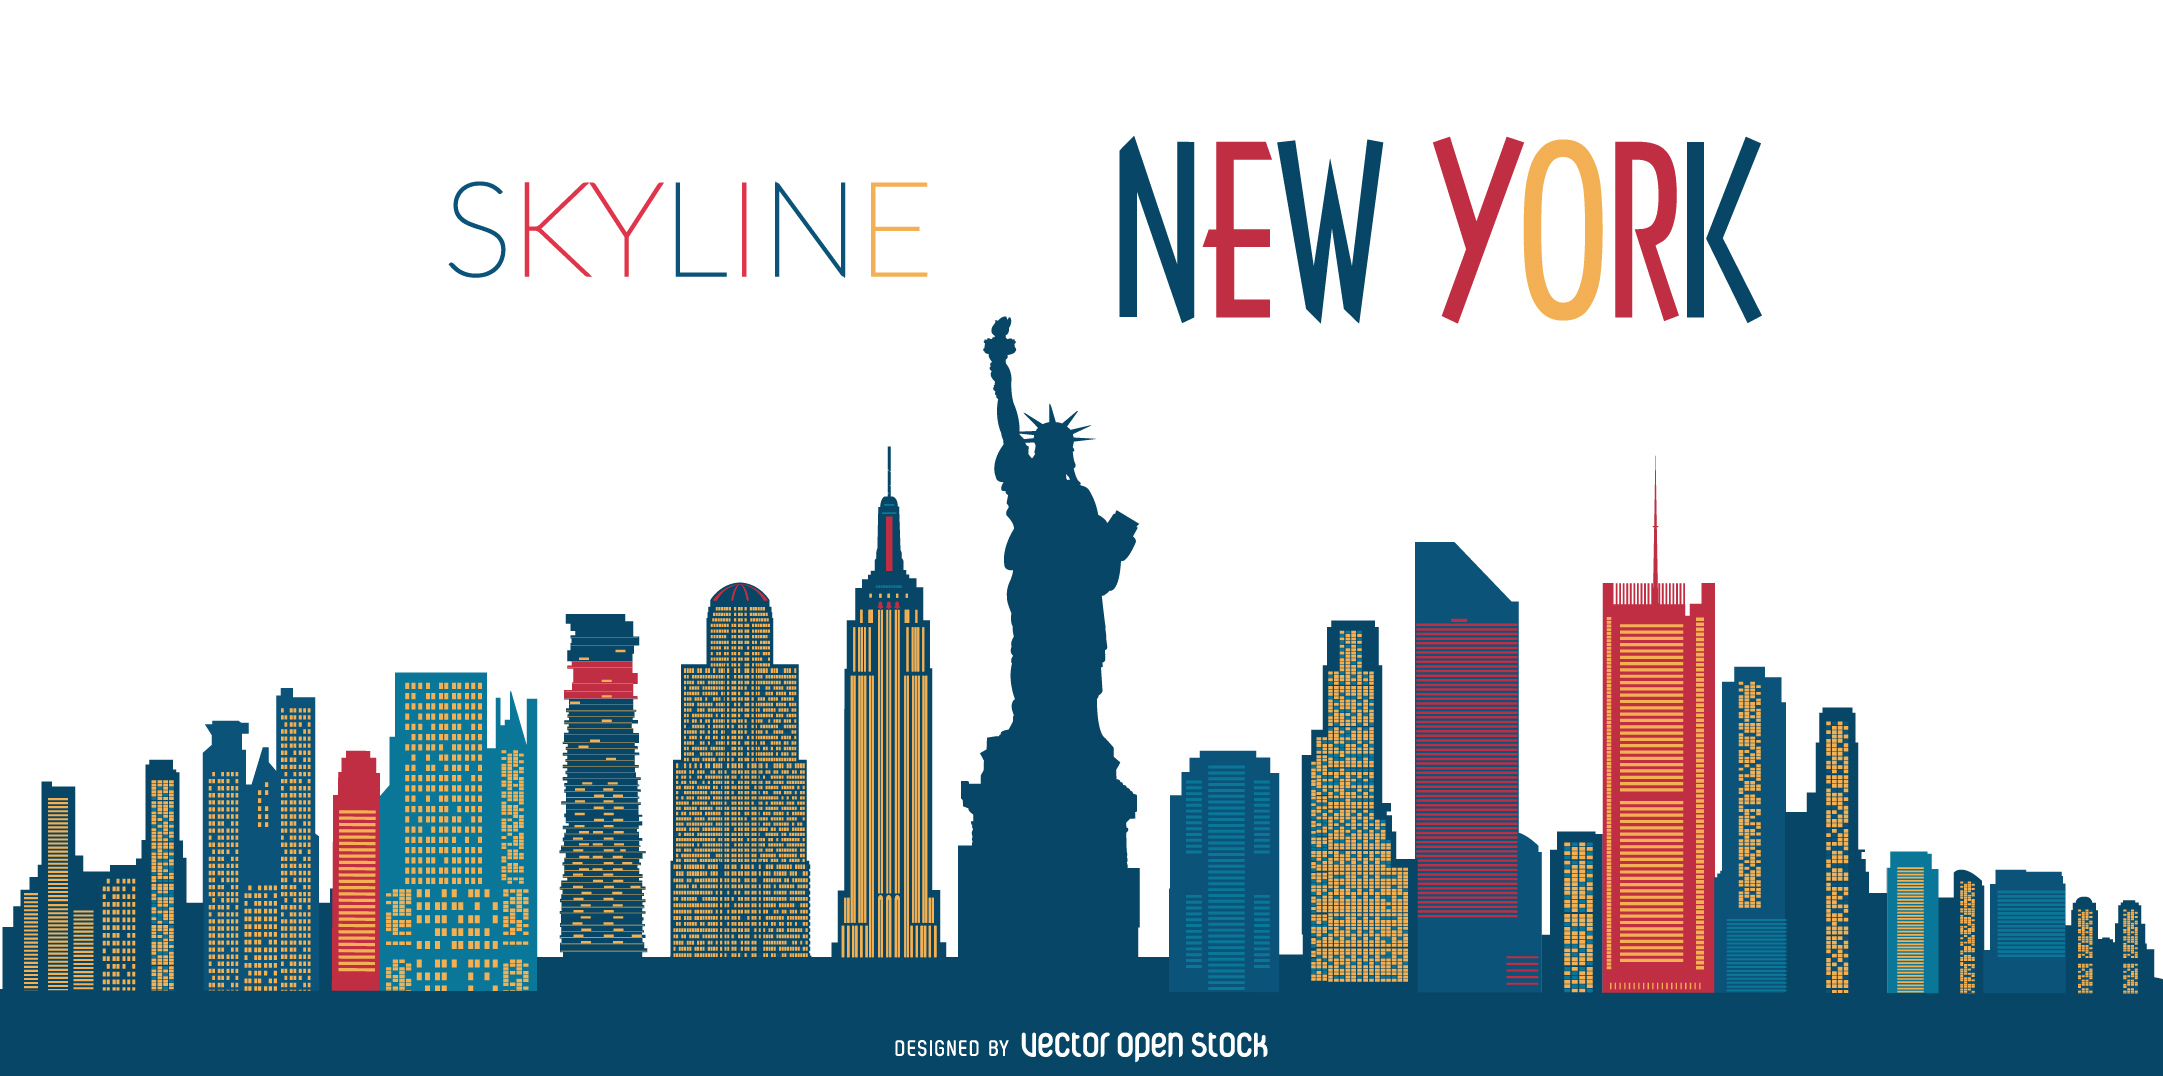 New York skyline silhouette - Vector download